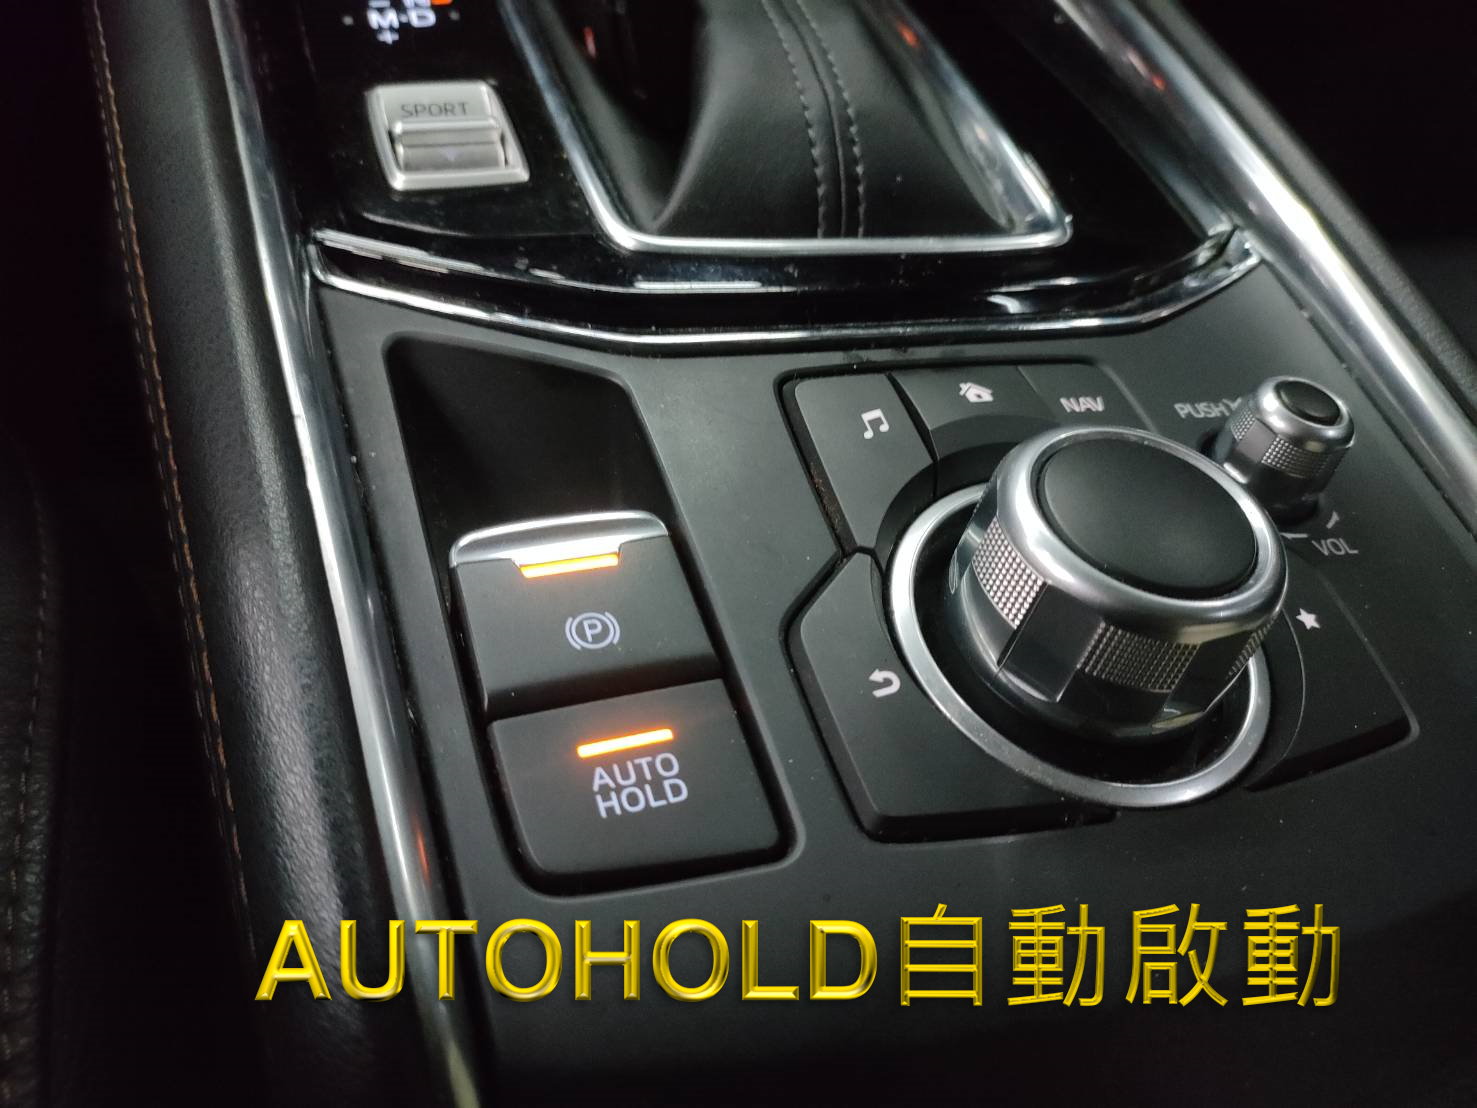 AutoHold自動啟動器